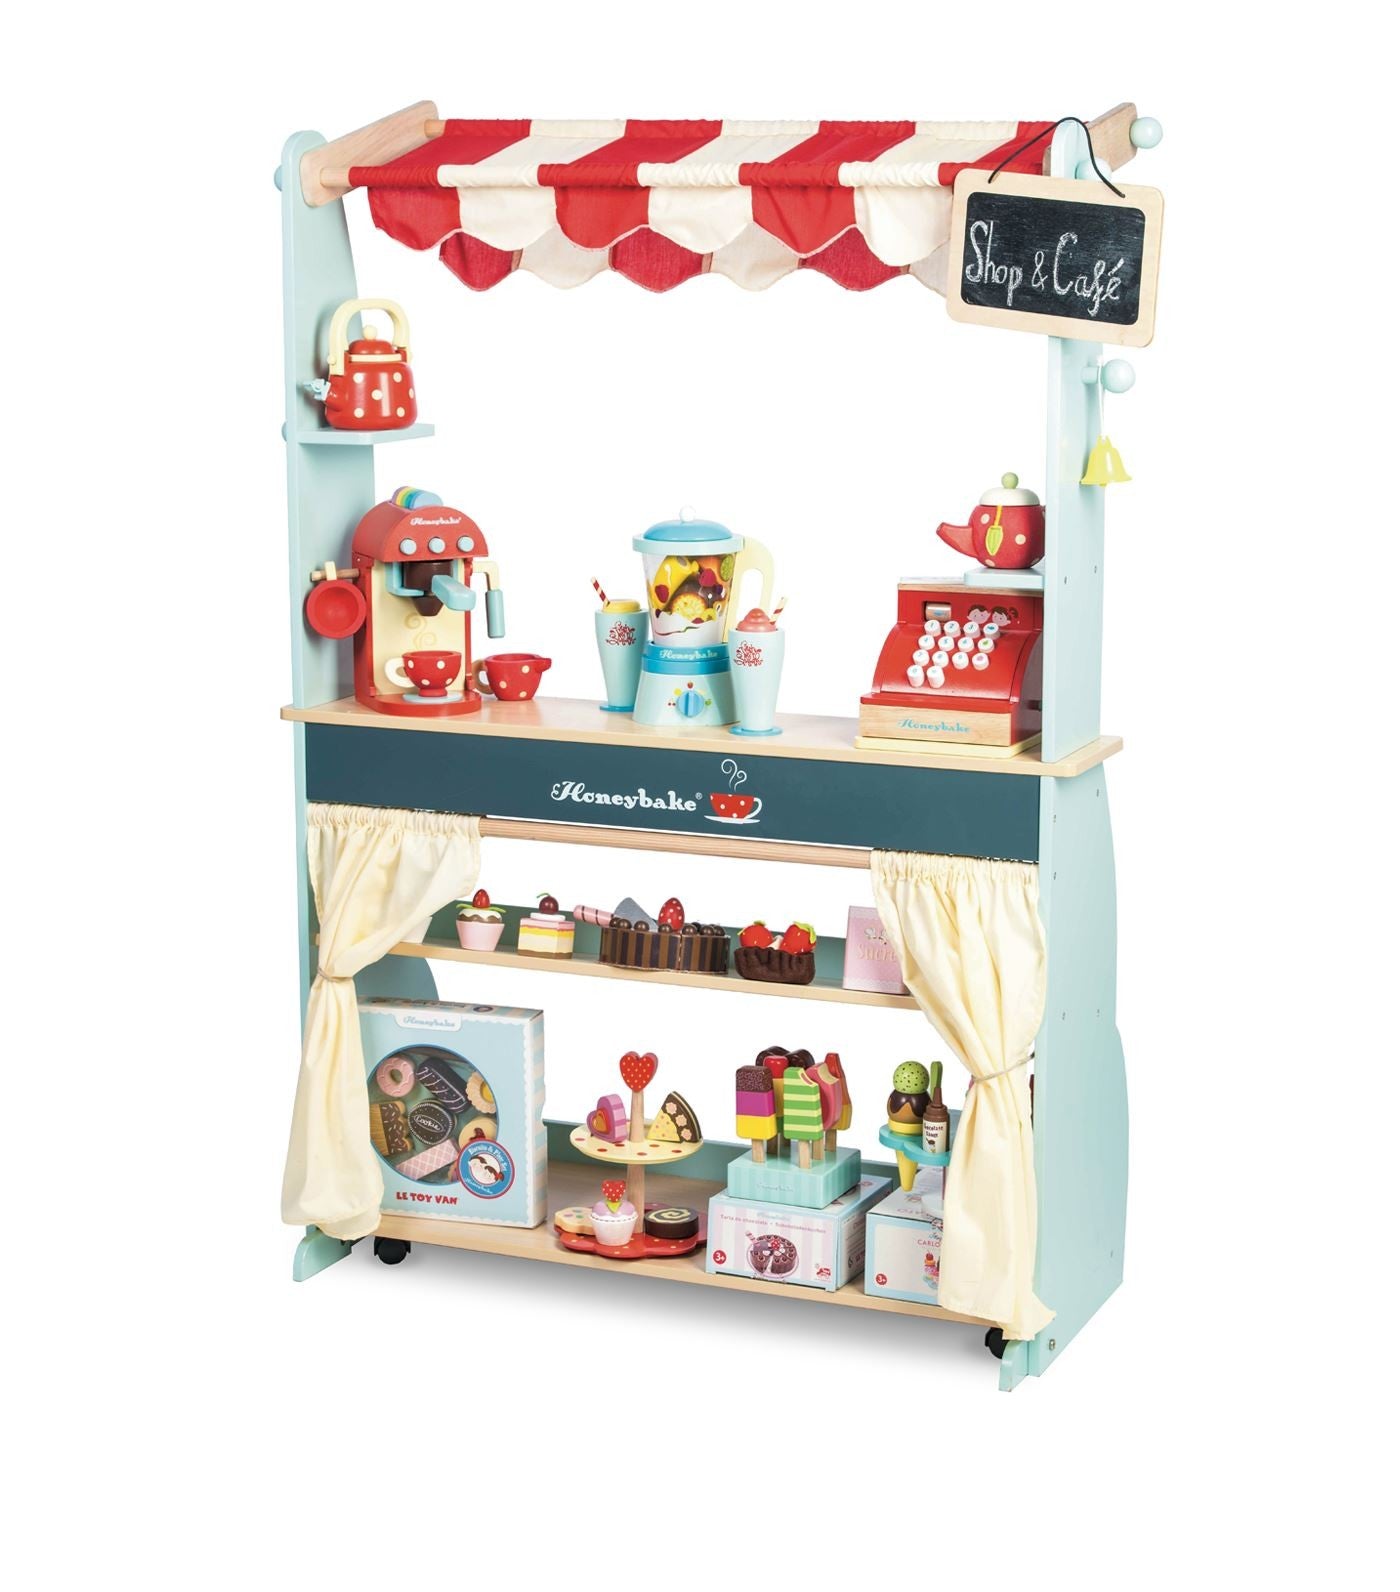 Le Toy Van Honeybake Shop and Cafe - Bundle